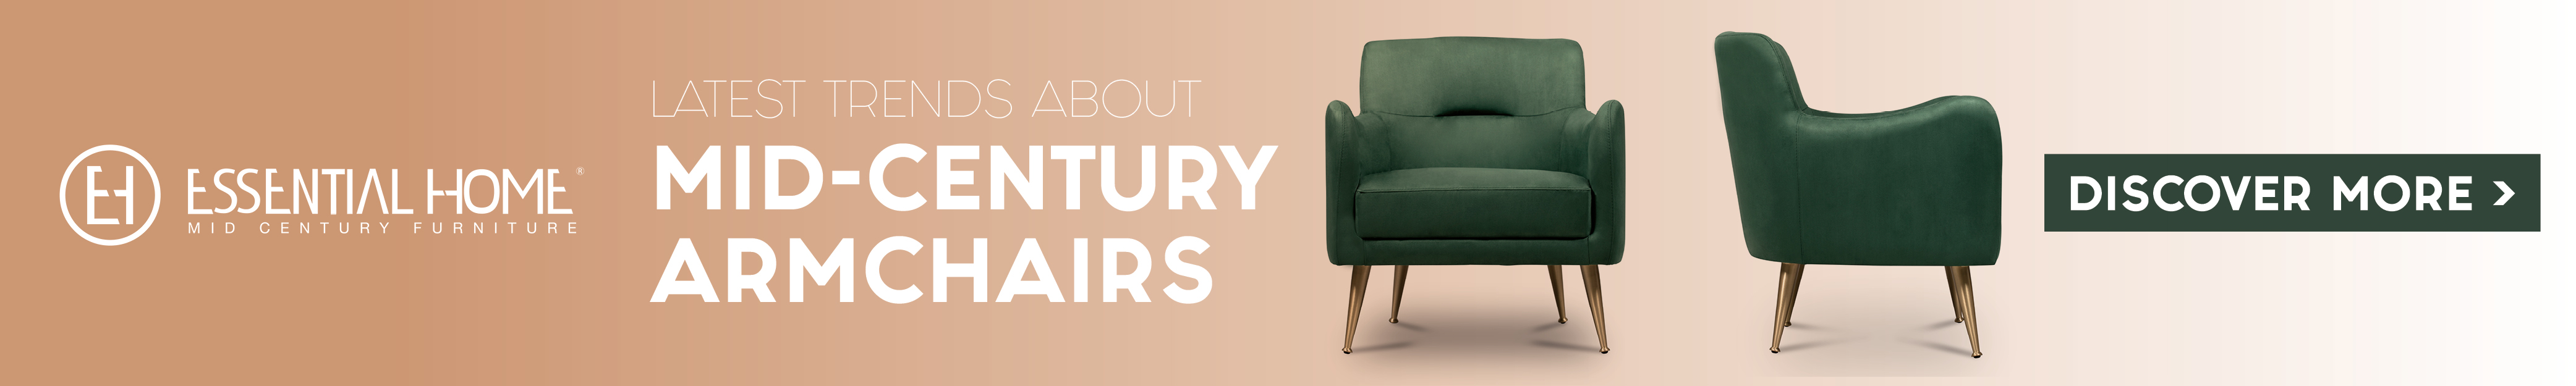 eh-dandridge-armchair modern Features of modern interior Product EH